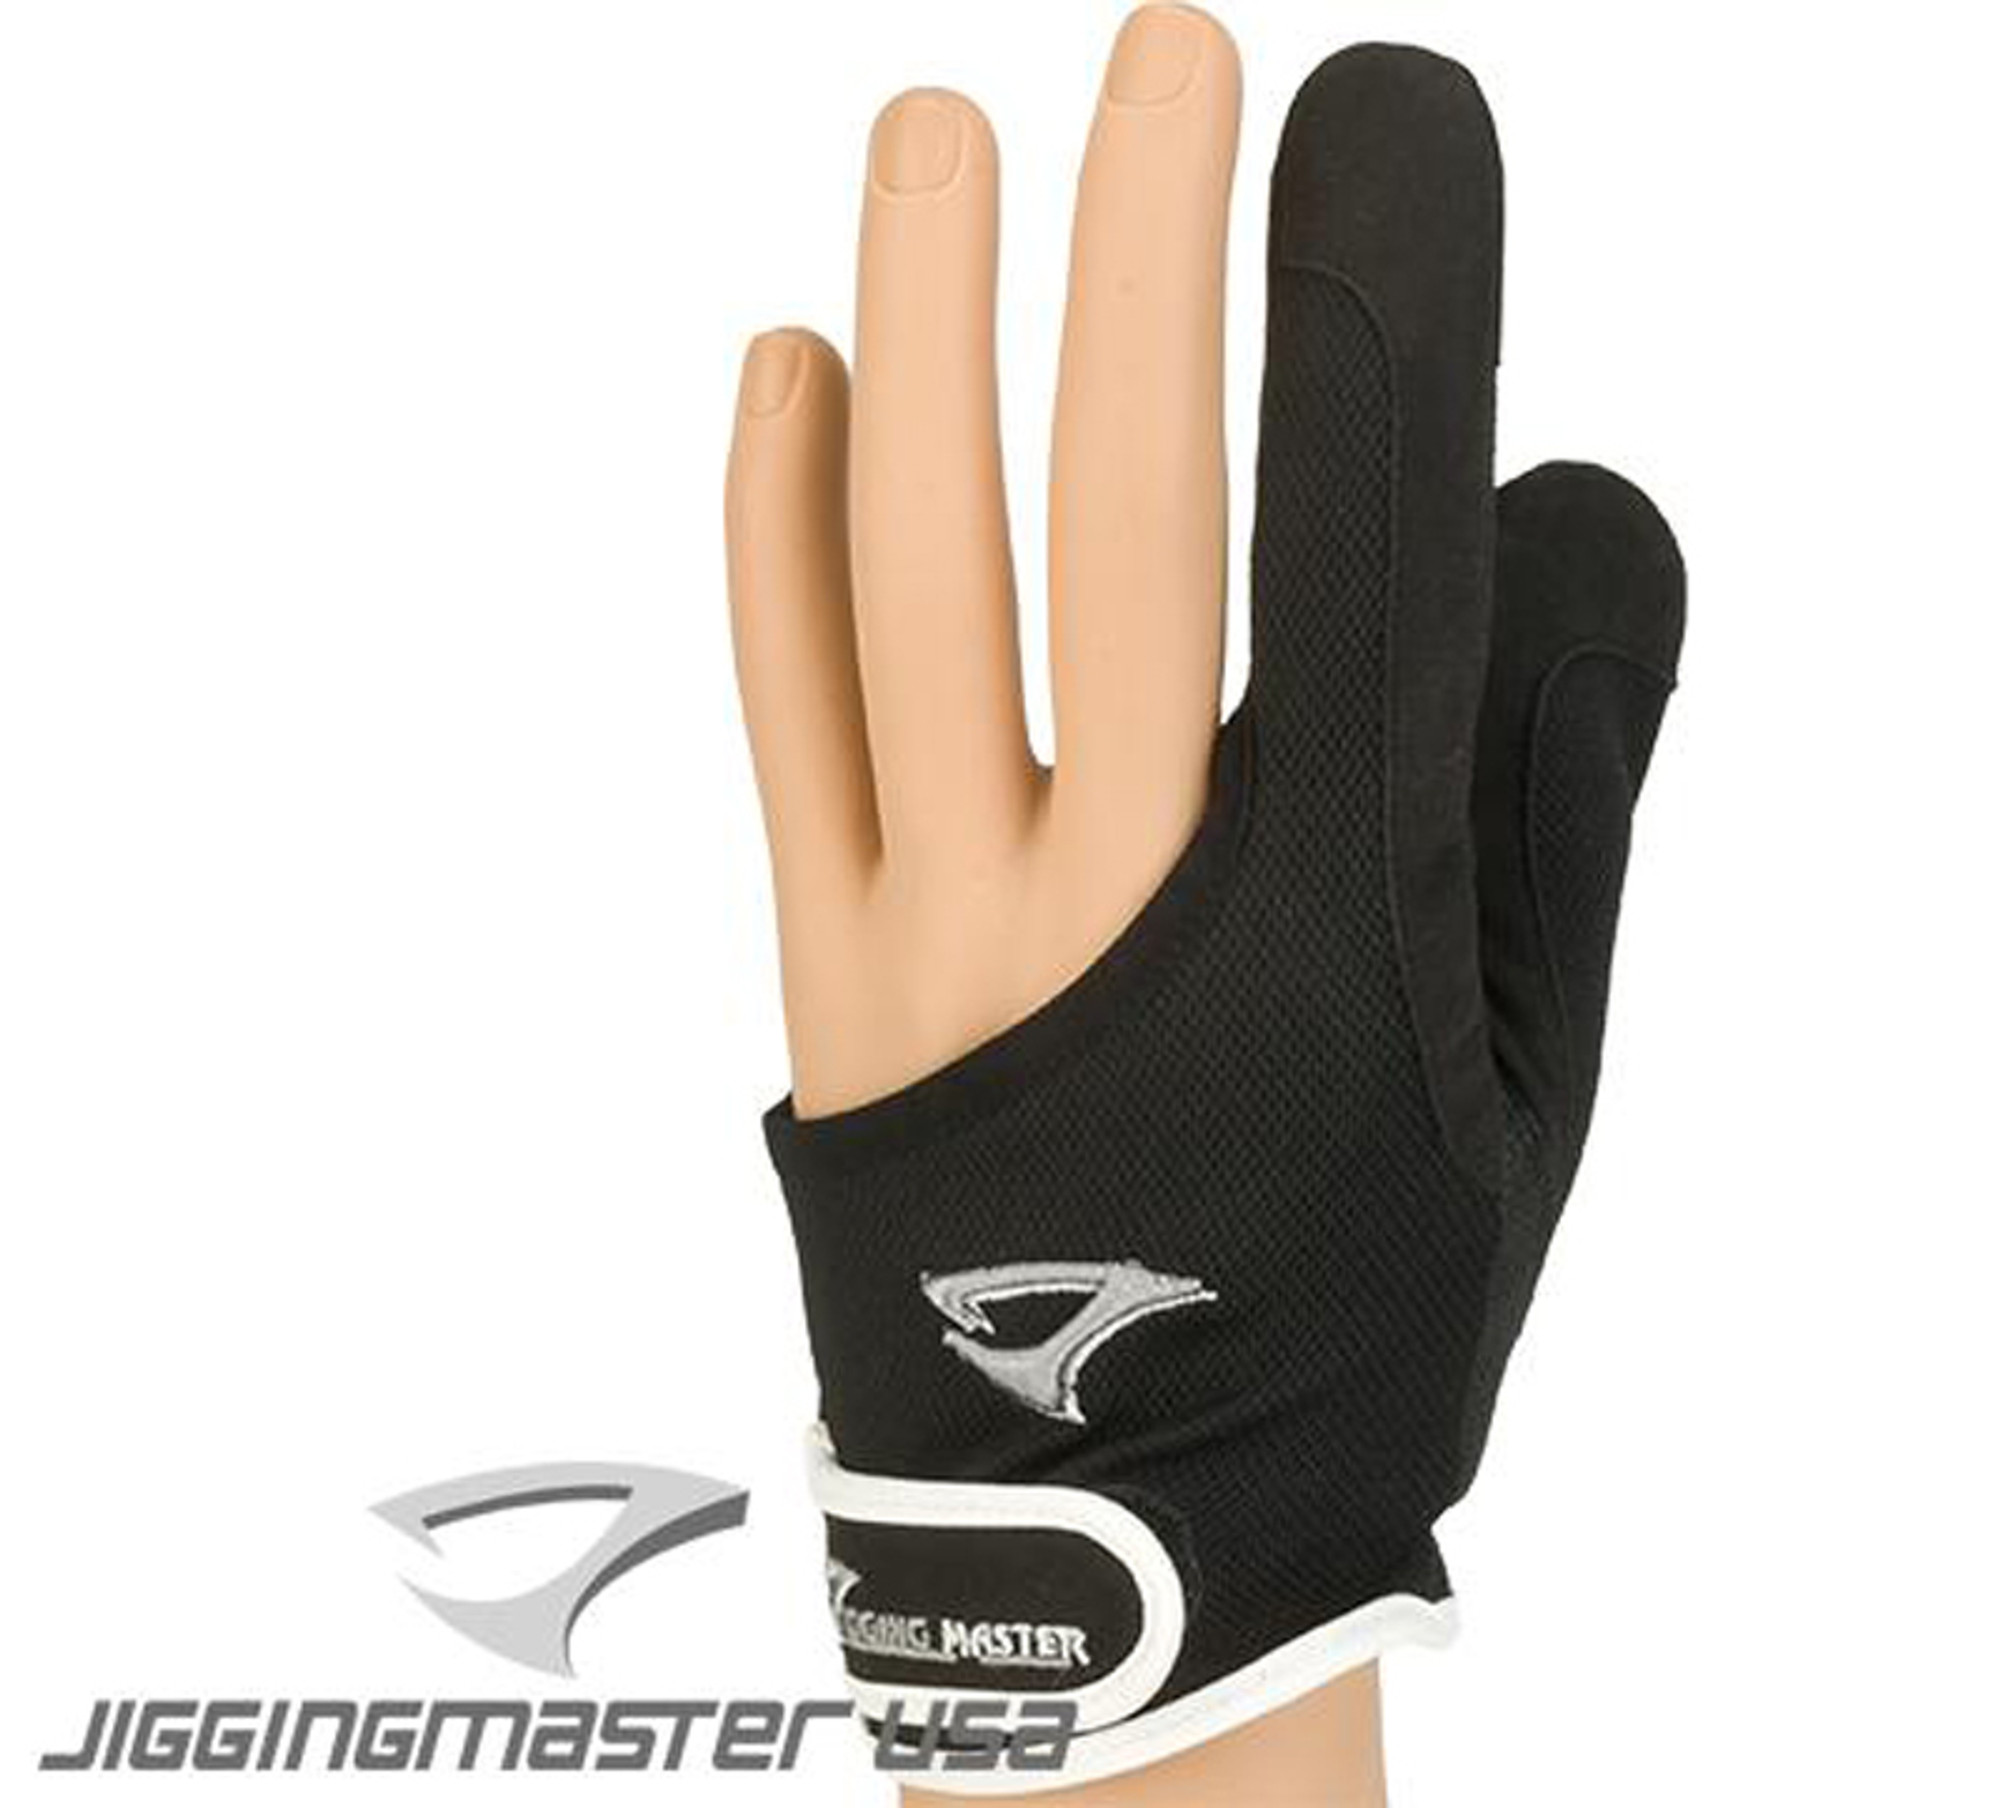 Jigging Master Special Left Hand Only 2-Finger Glove 